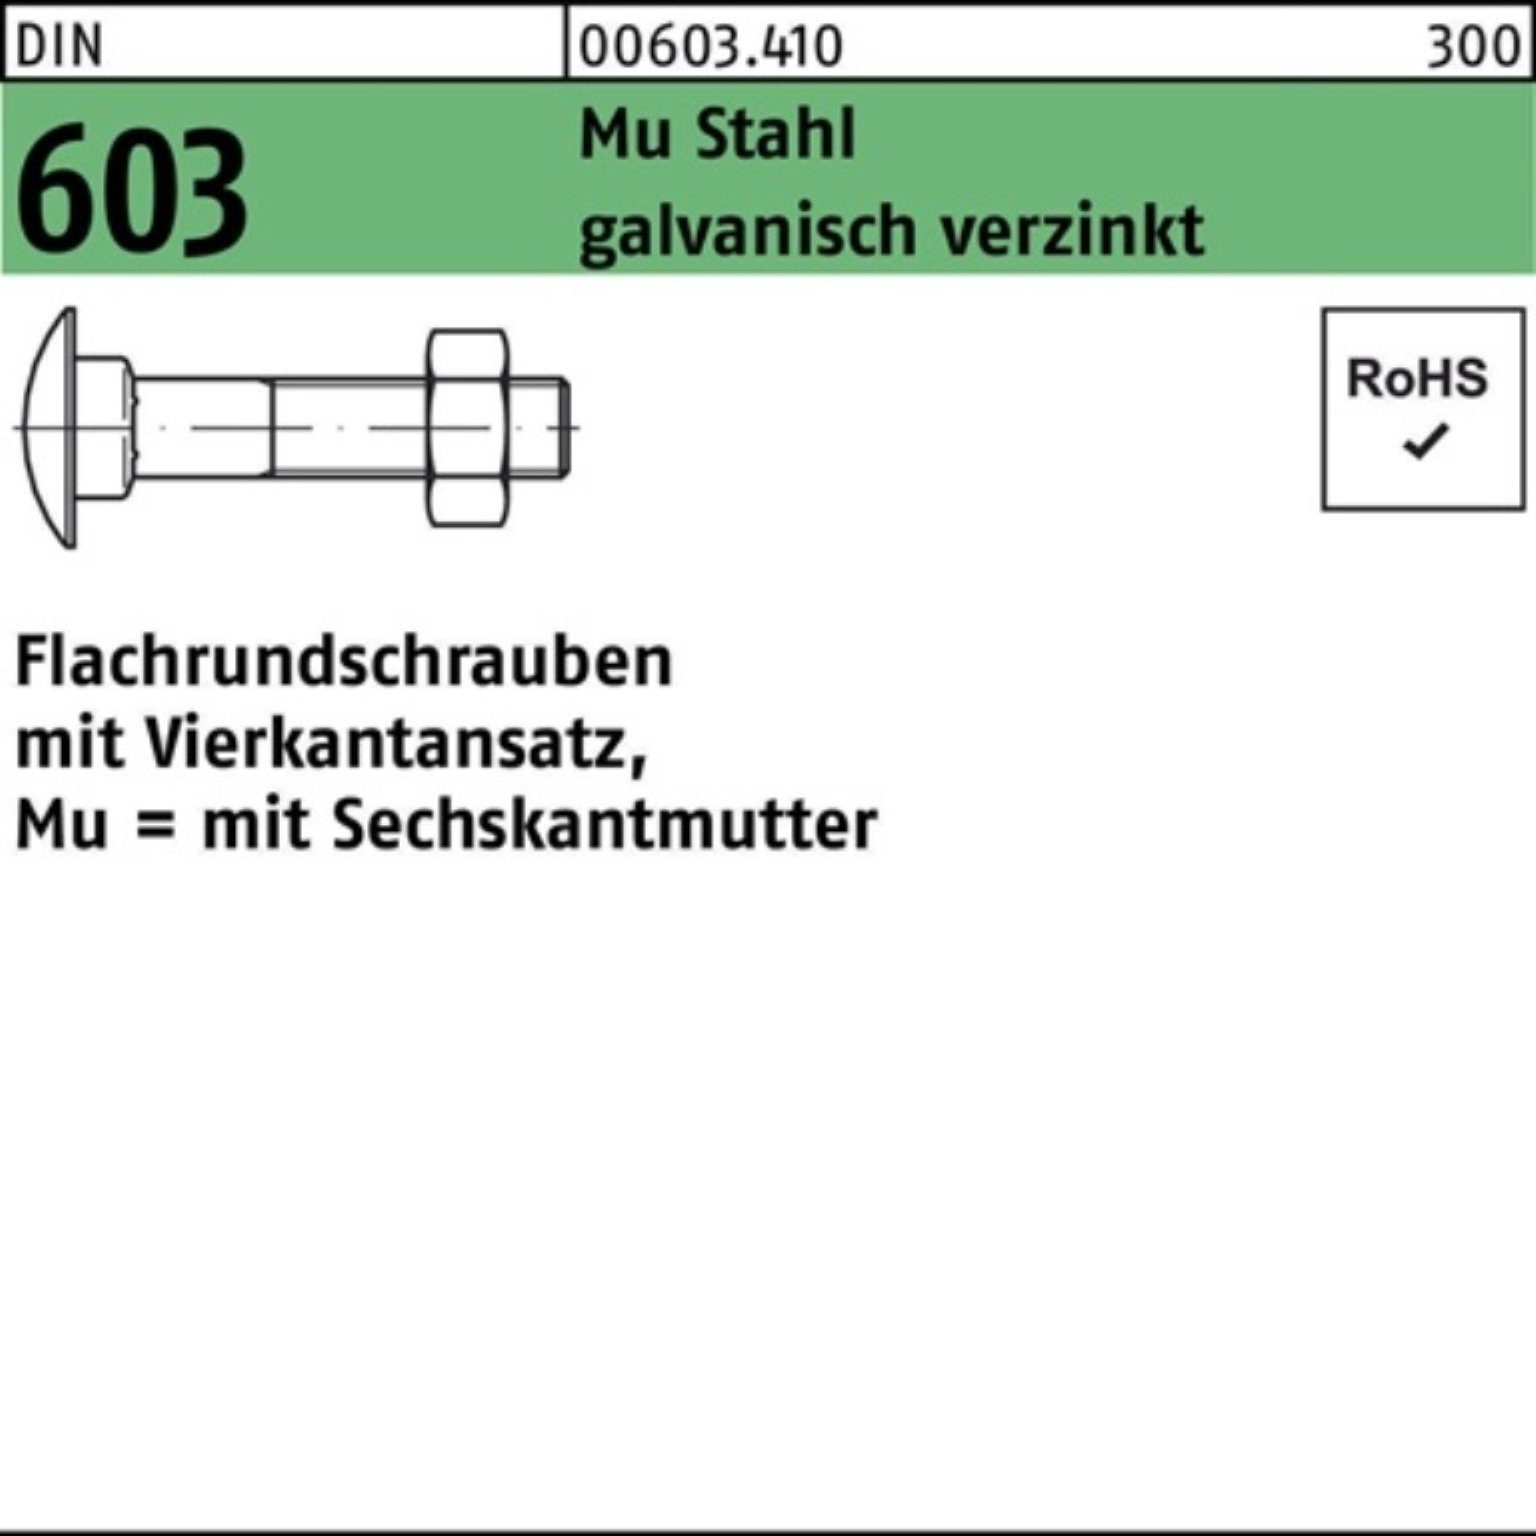 603 Vierkantansatz/6-ktmutter M10x90 Pack DIN Schraube Reyher 100er Flachrundschraube